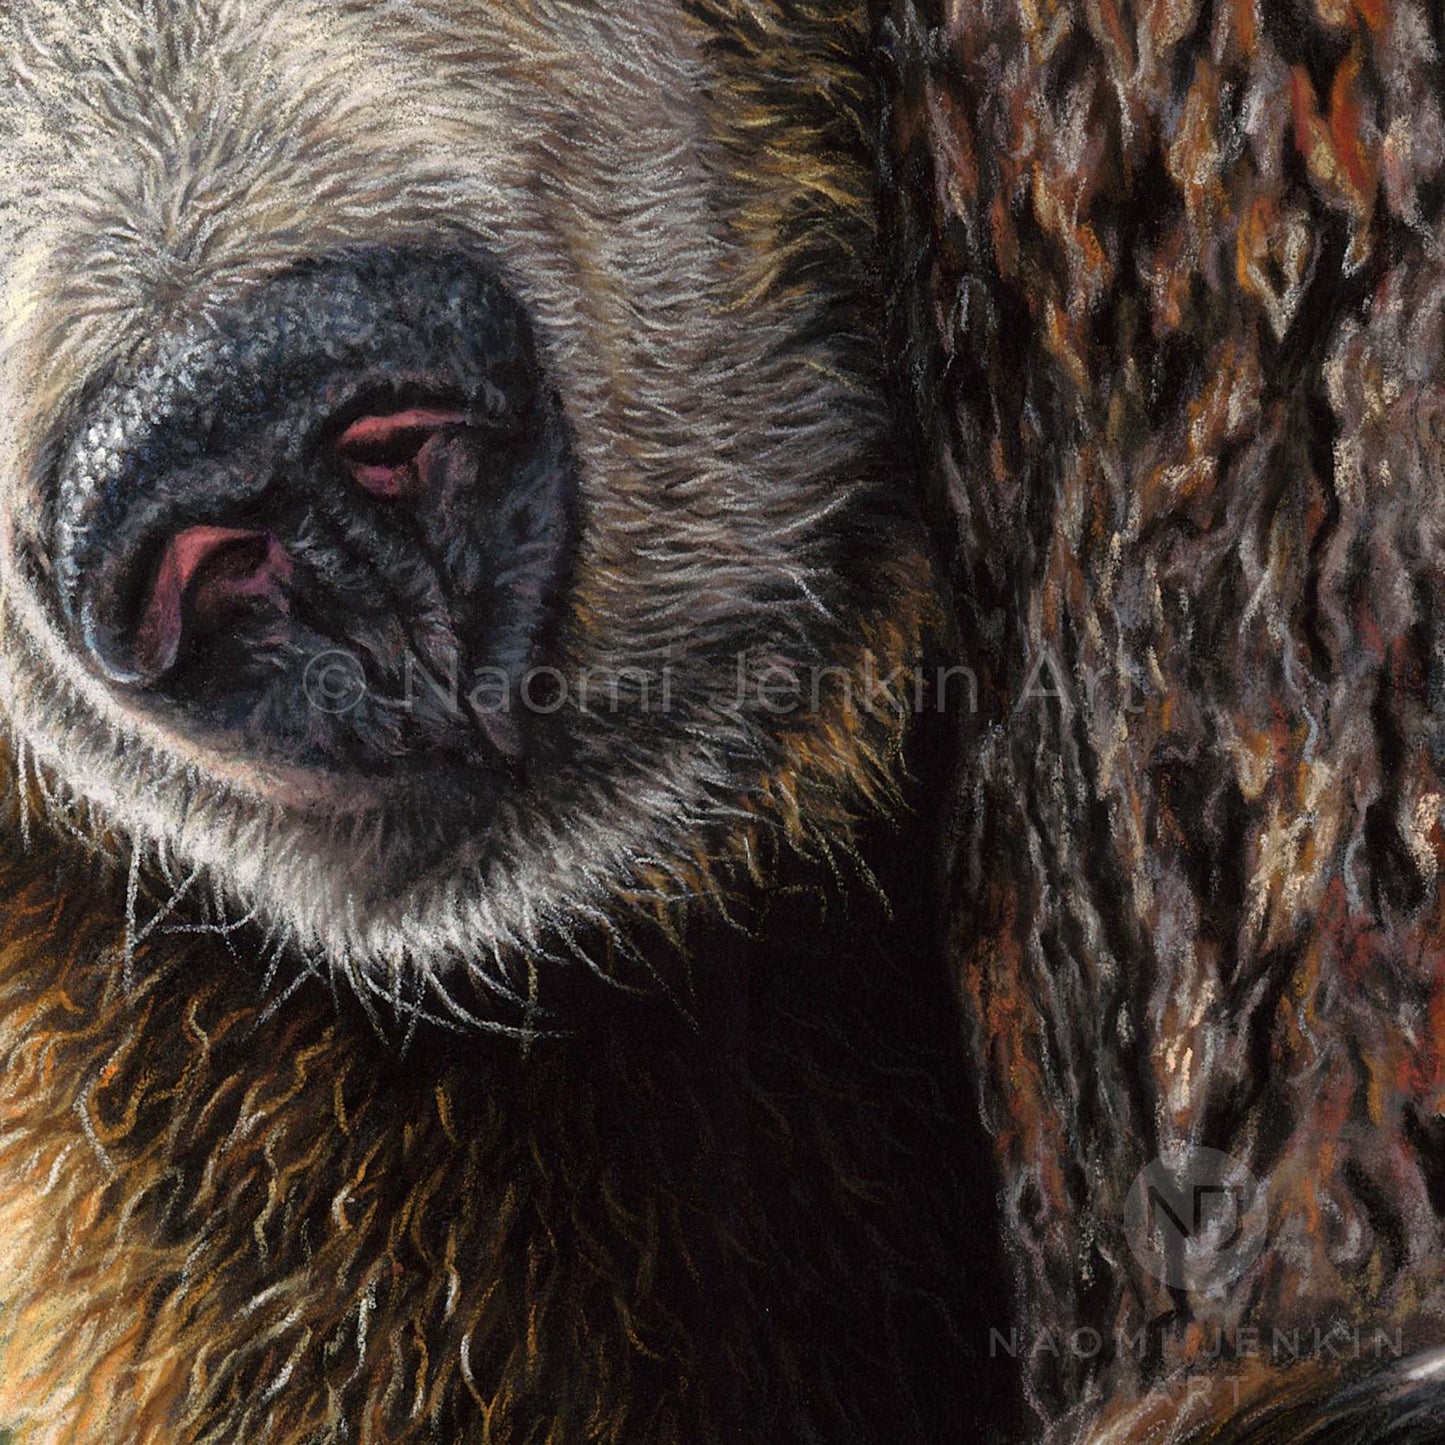 Bear snout close up drawing from the 'Peekaboo' original painting by Naomi Jenkin